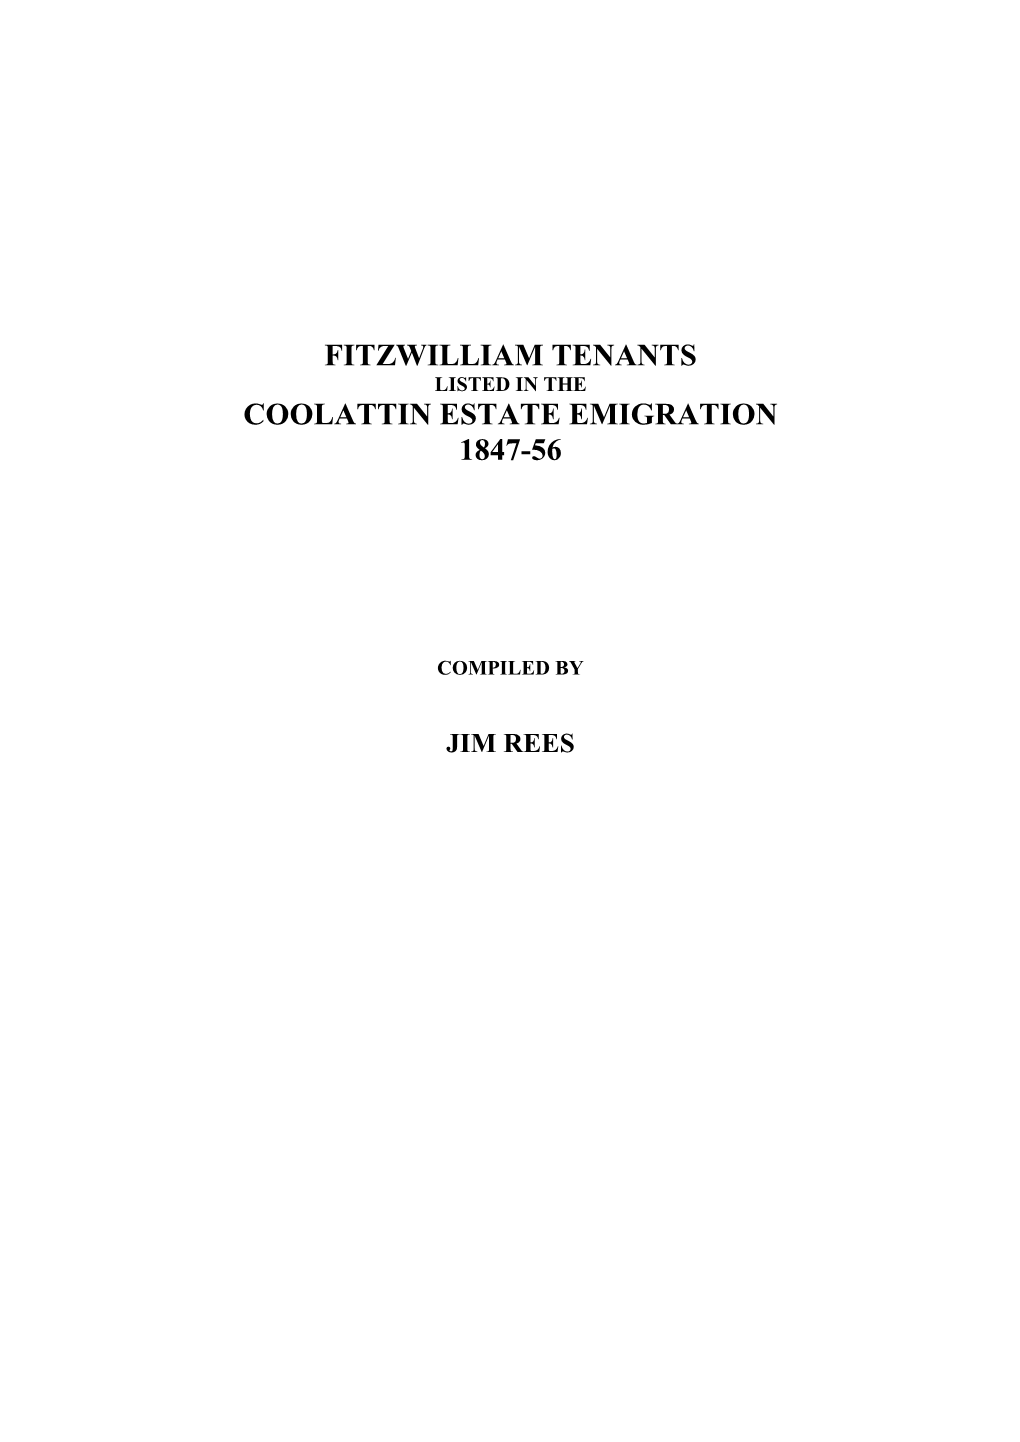 Fitzwilliam Tenants Coolattin Estate Emigration 1847-56